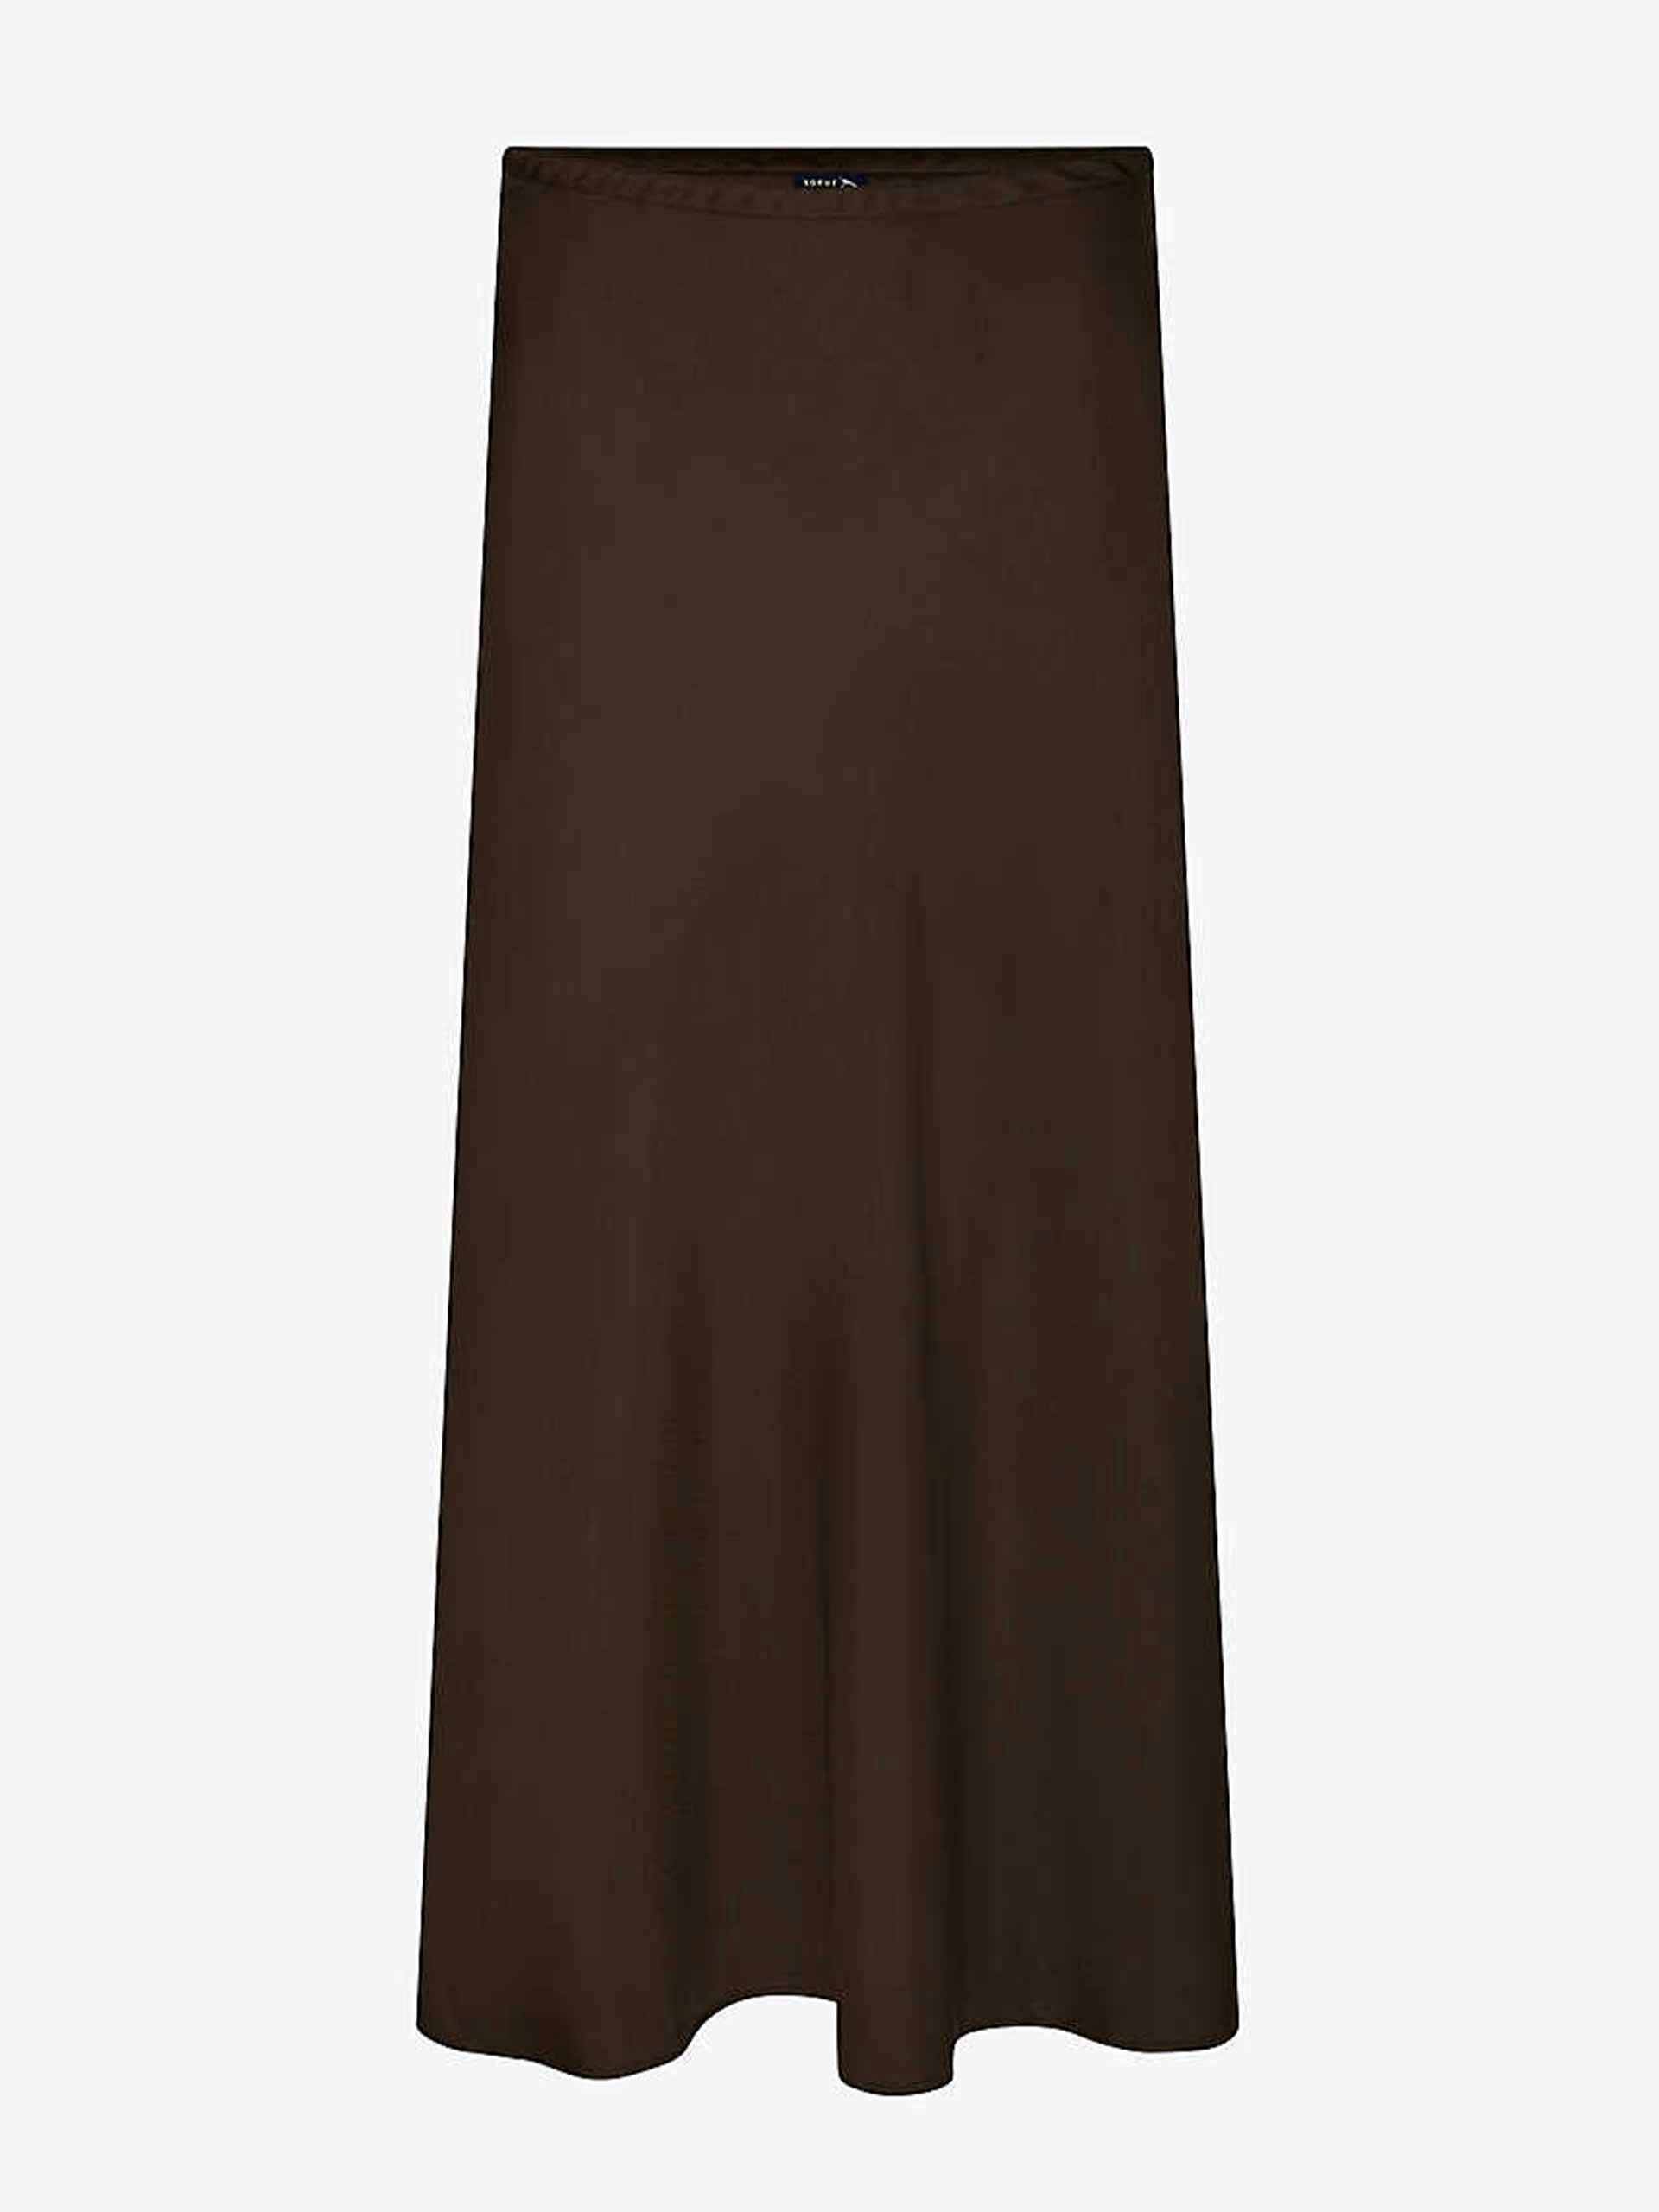 Woven brown midi skirt with elasticated waist